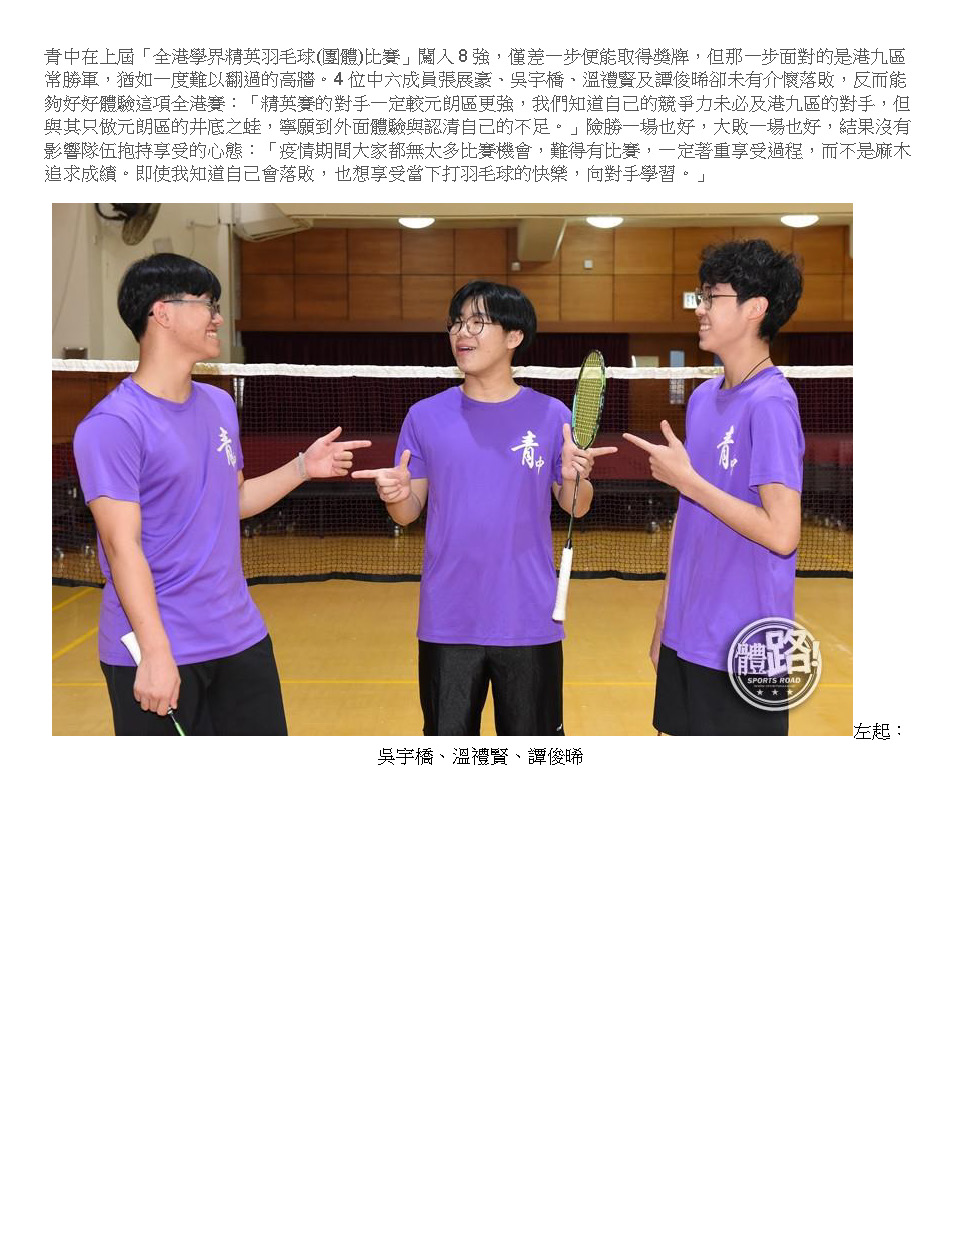 News on Sportsroad-Hong Kong Sports News (2023/5/11)